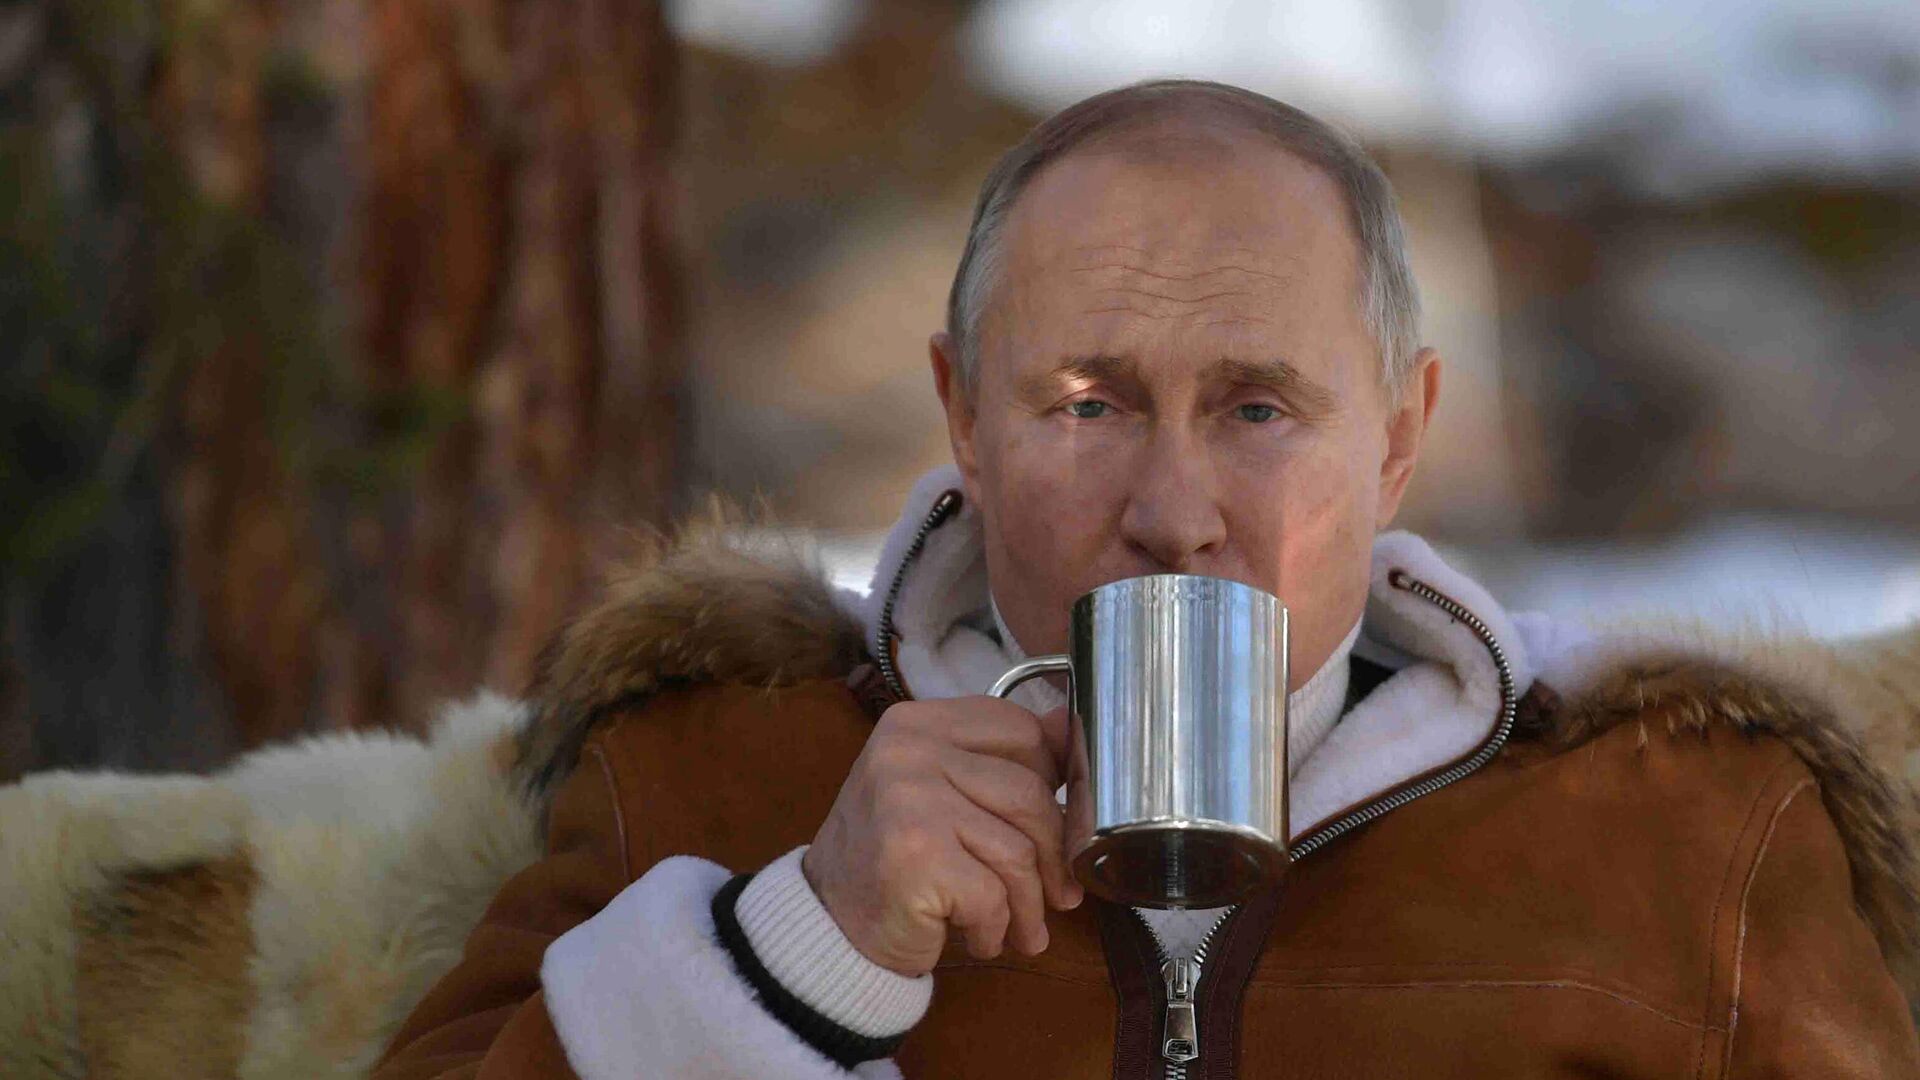 21 марта 2021. Президент РФ Владимир Путин во время отдыха в тайге. - Sputnik Србија, 1920, 27.11.2021